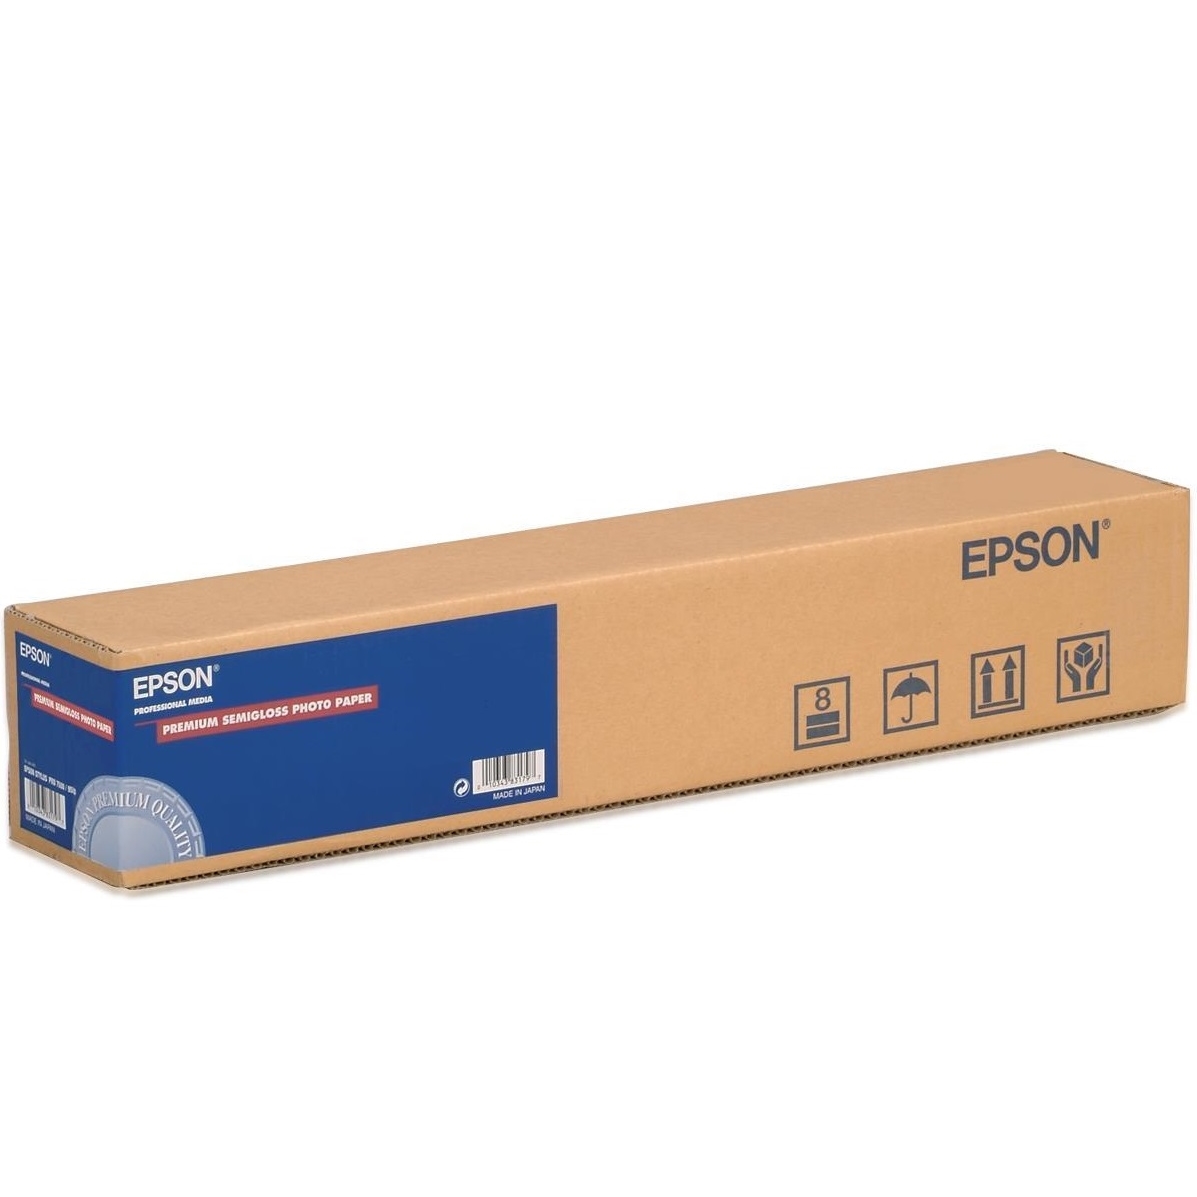 Original Epson S041743 260gsm 16in x 30.5m Premium Semi-Gloss Photo Paper Roll (C13S041743)